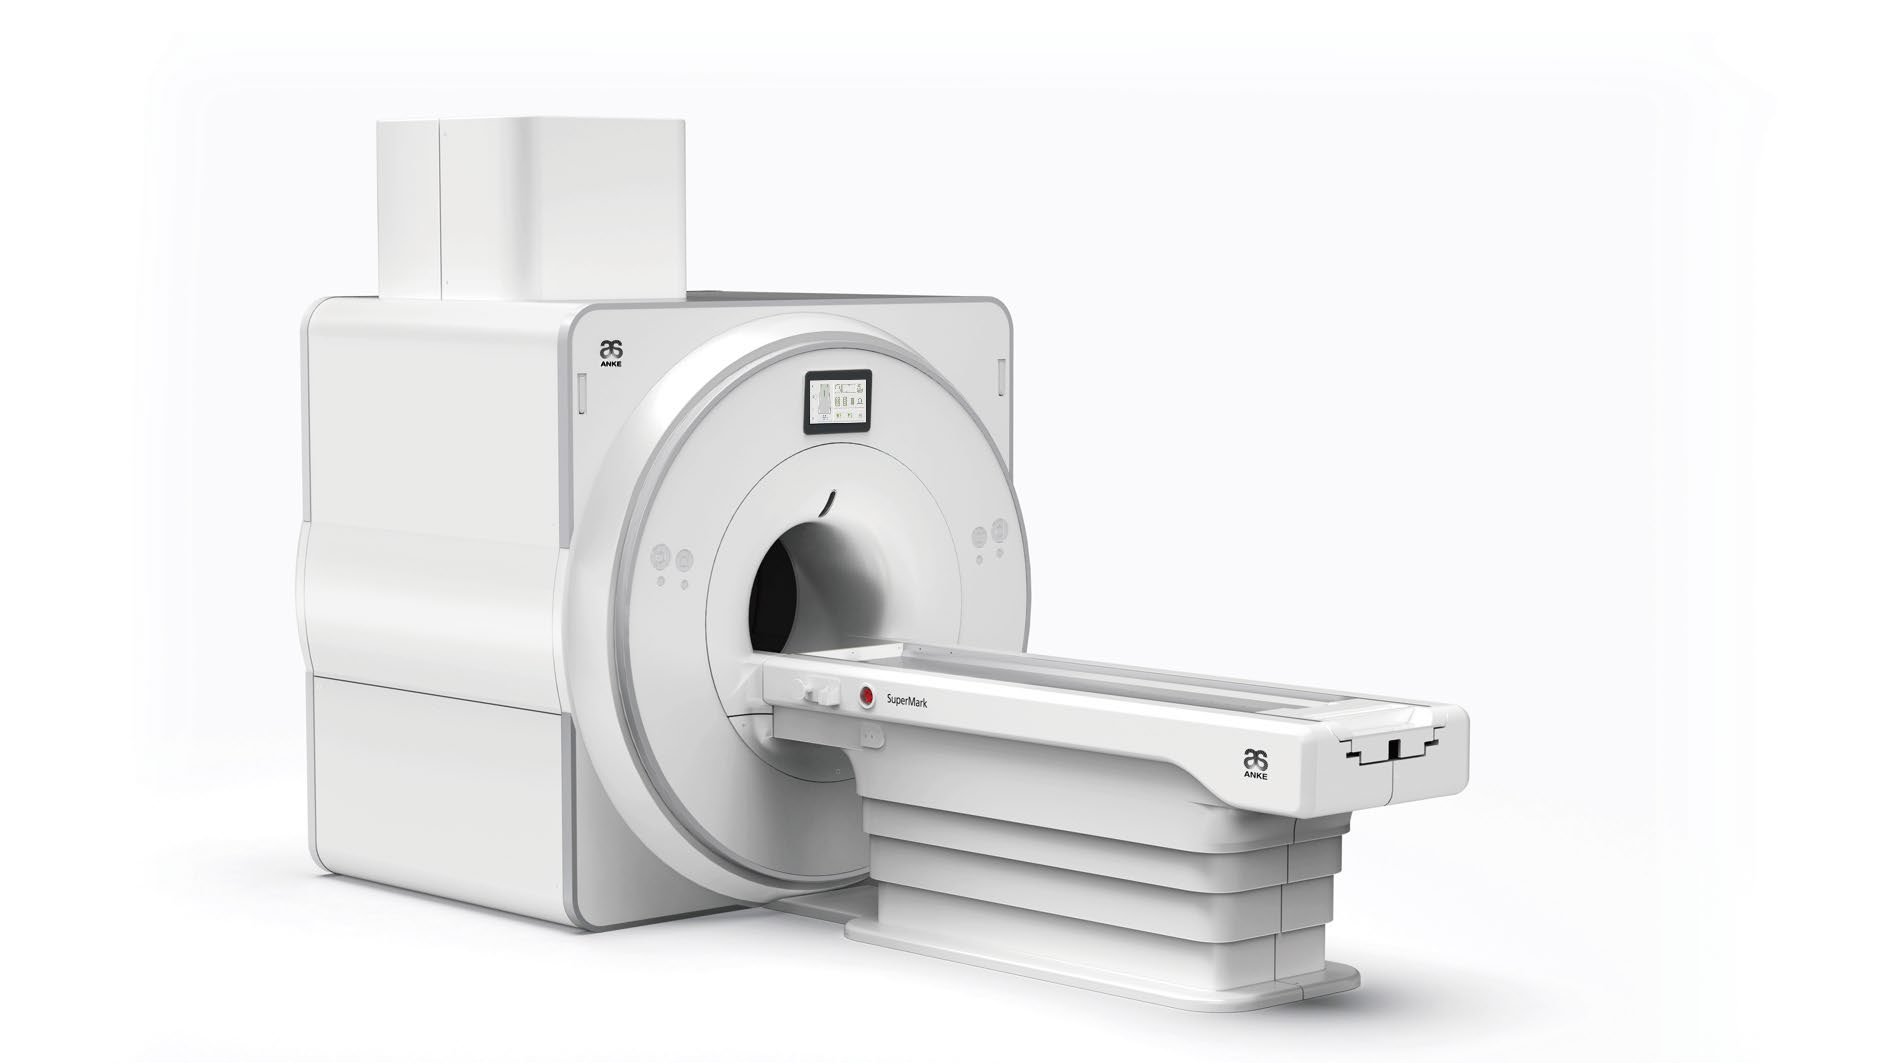 Superconducting MRI System